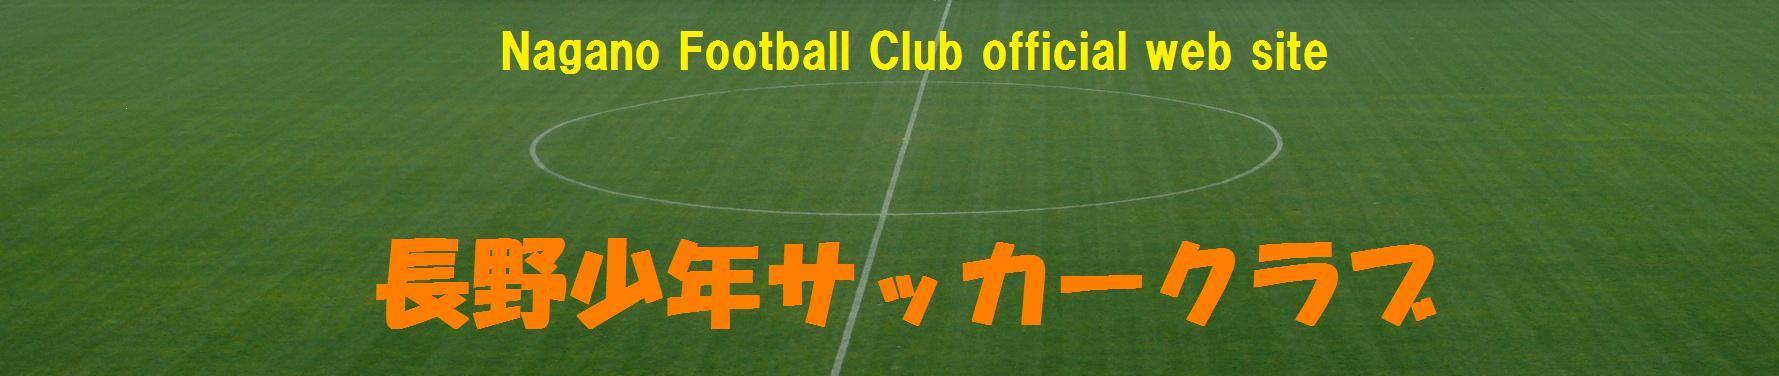 Nagano FC official website